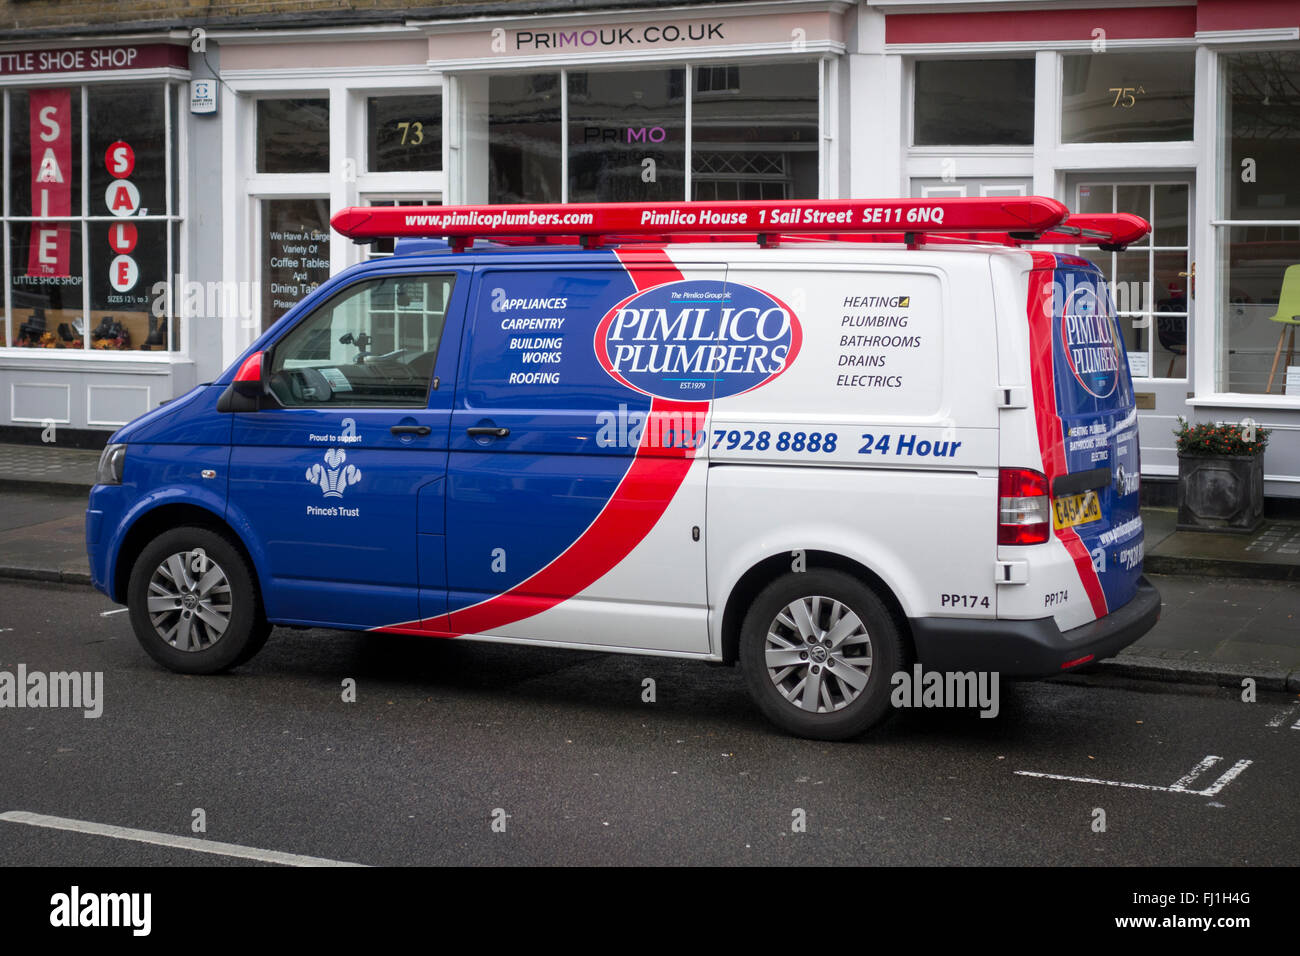 Pimlico Plumbers van, London, UK Stock Photo - Alamy